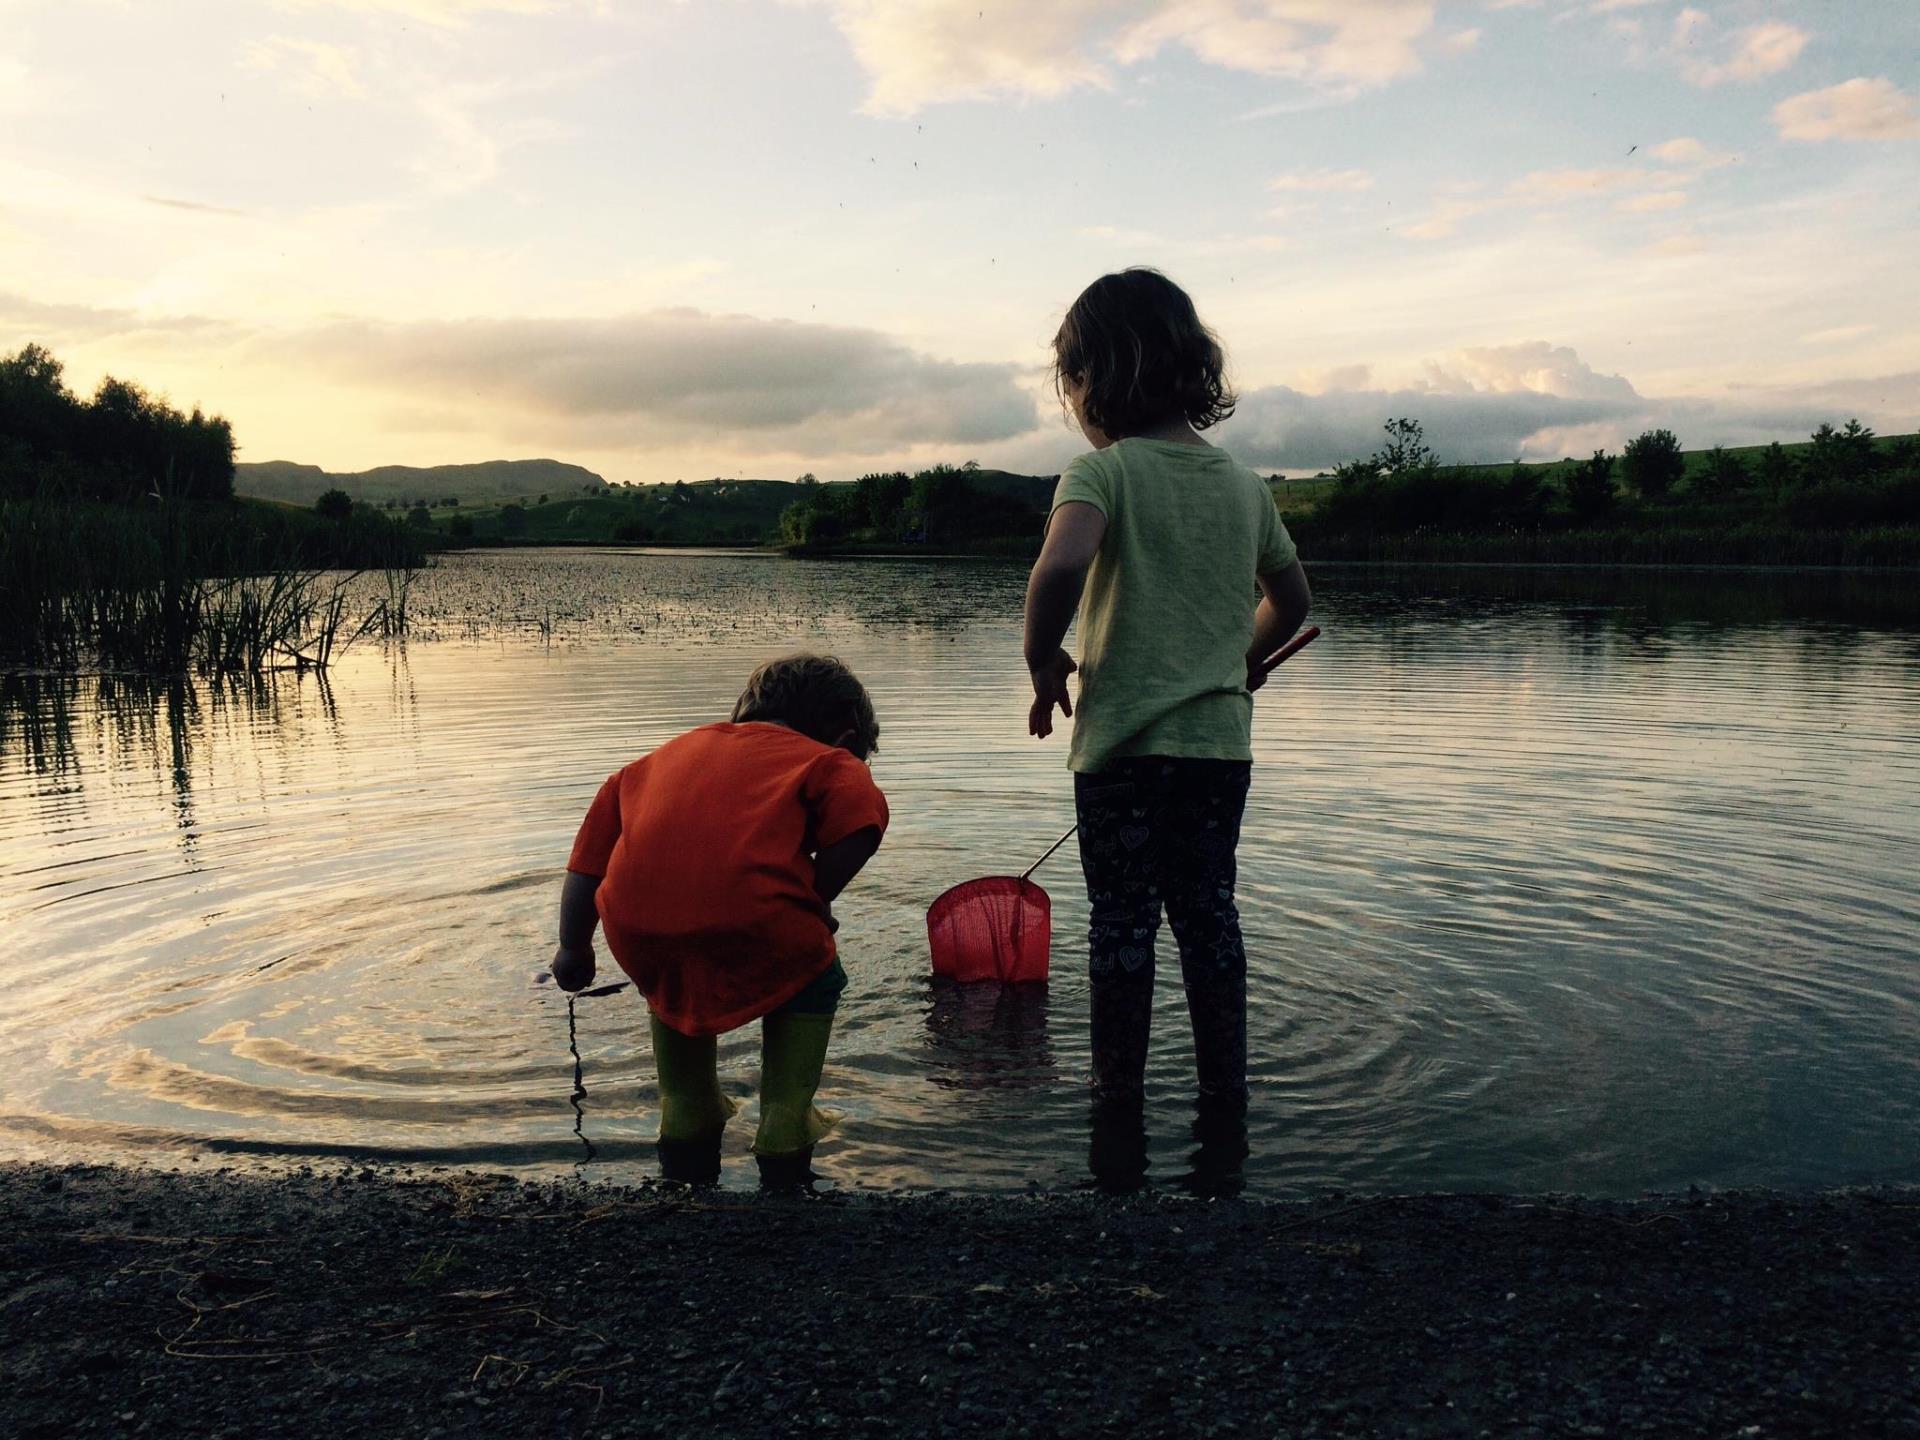 Children at the lake